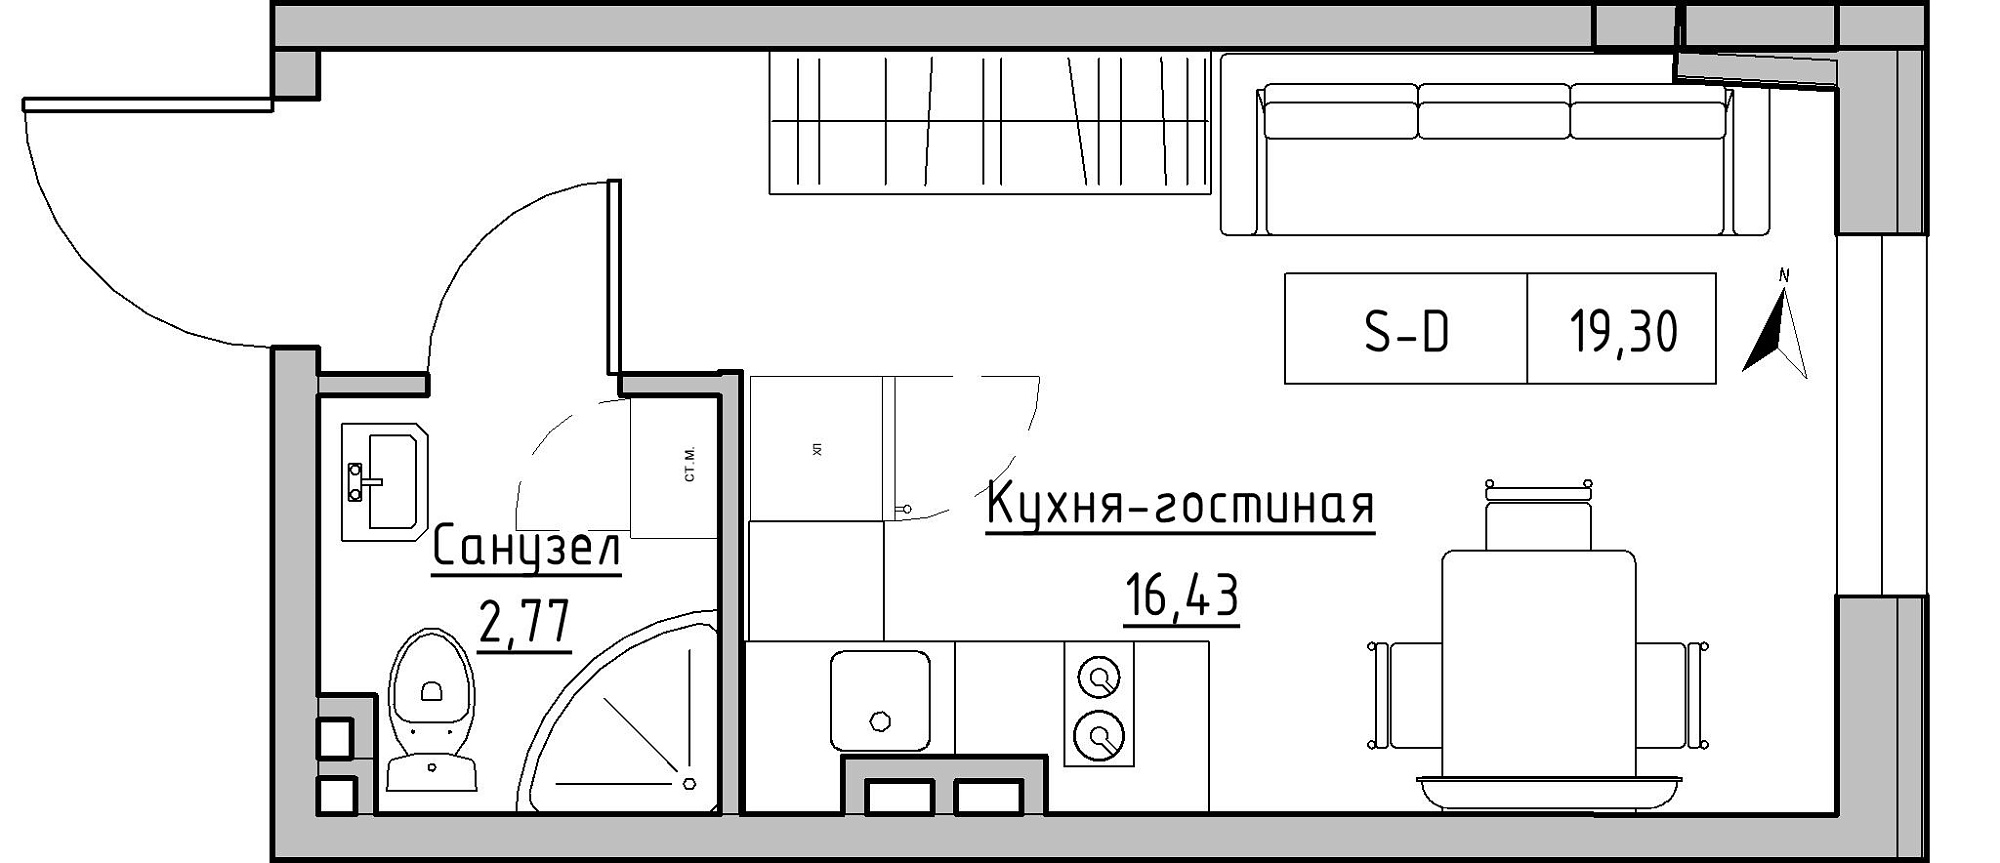 Planning Smart flats area 19.3m2, KS-024-02/0014.